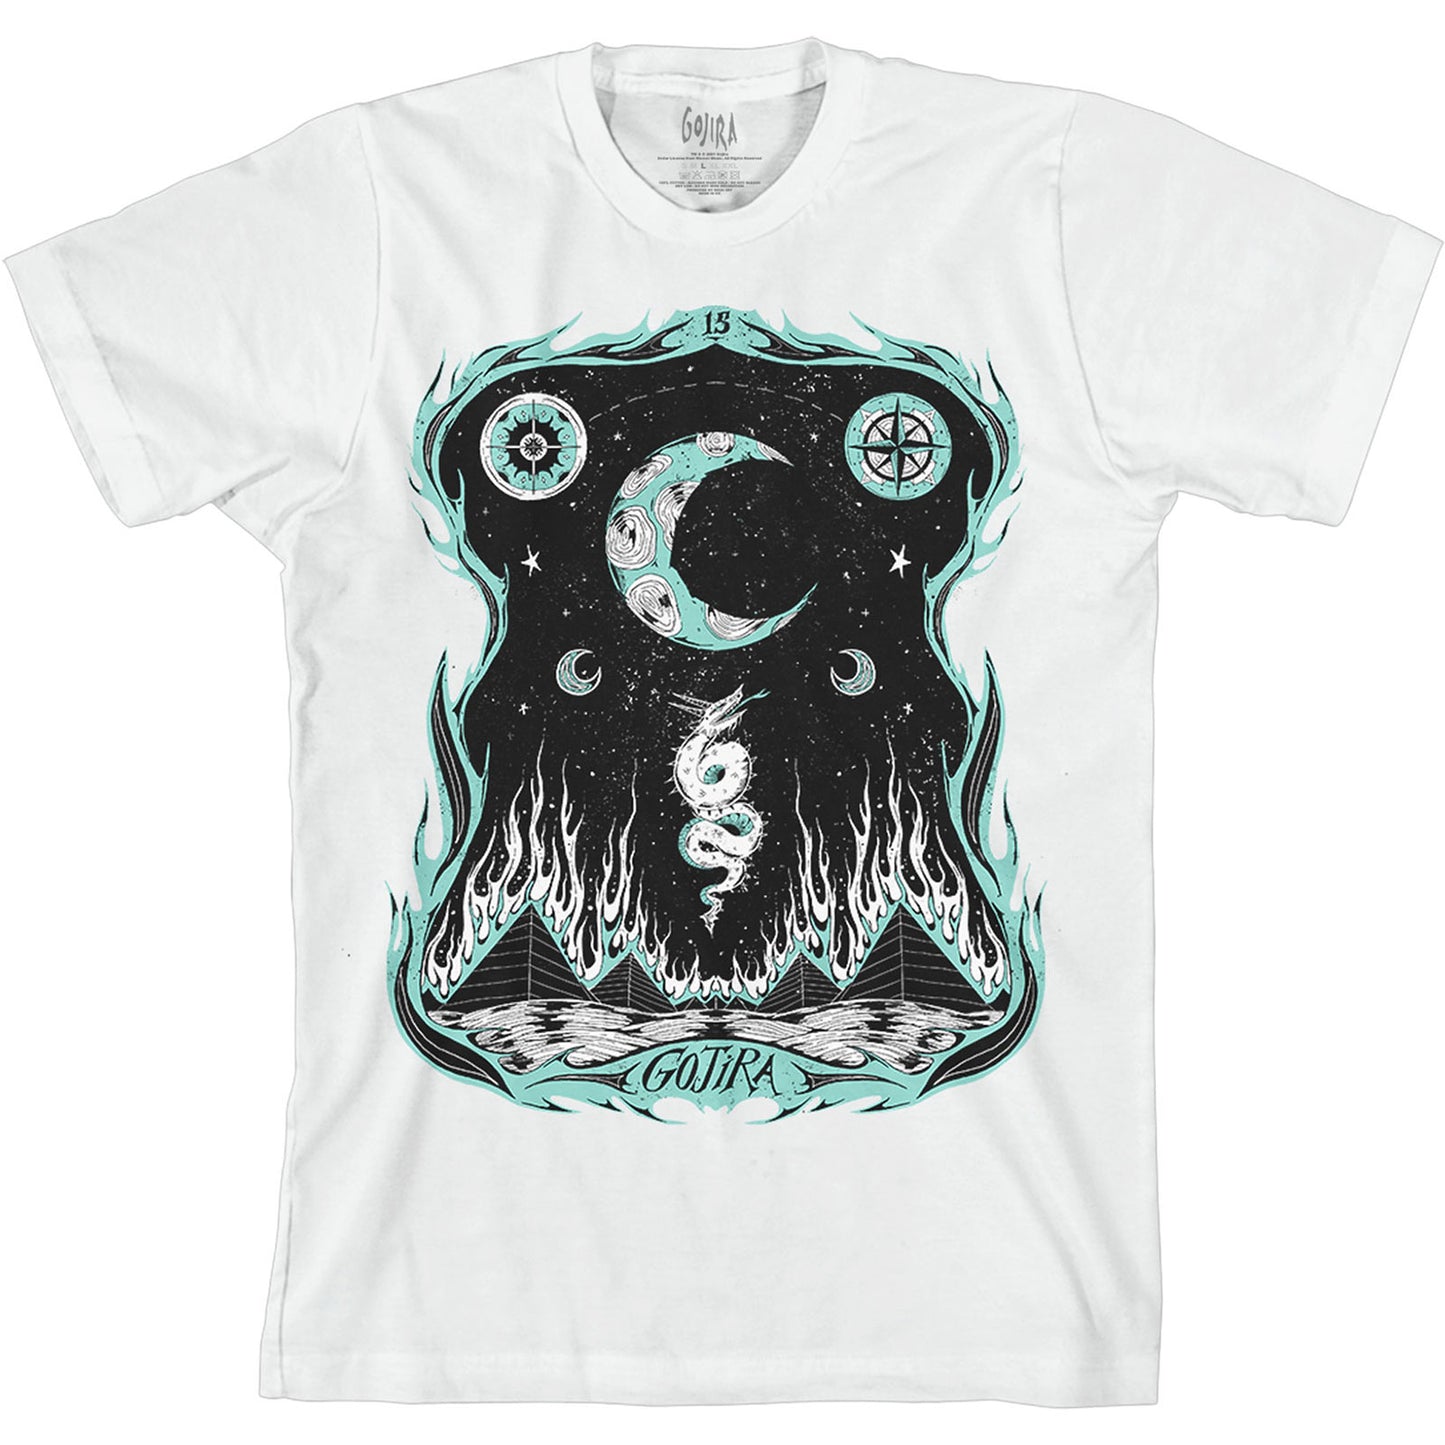 Gojira T-Shirt: Dragons Dwell